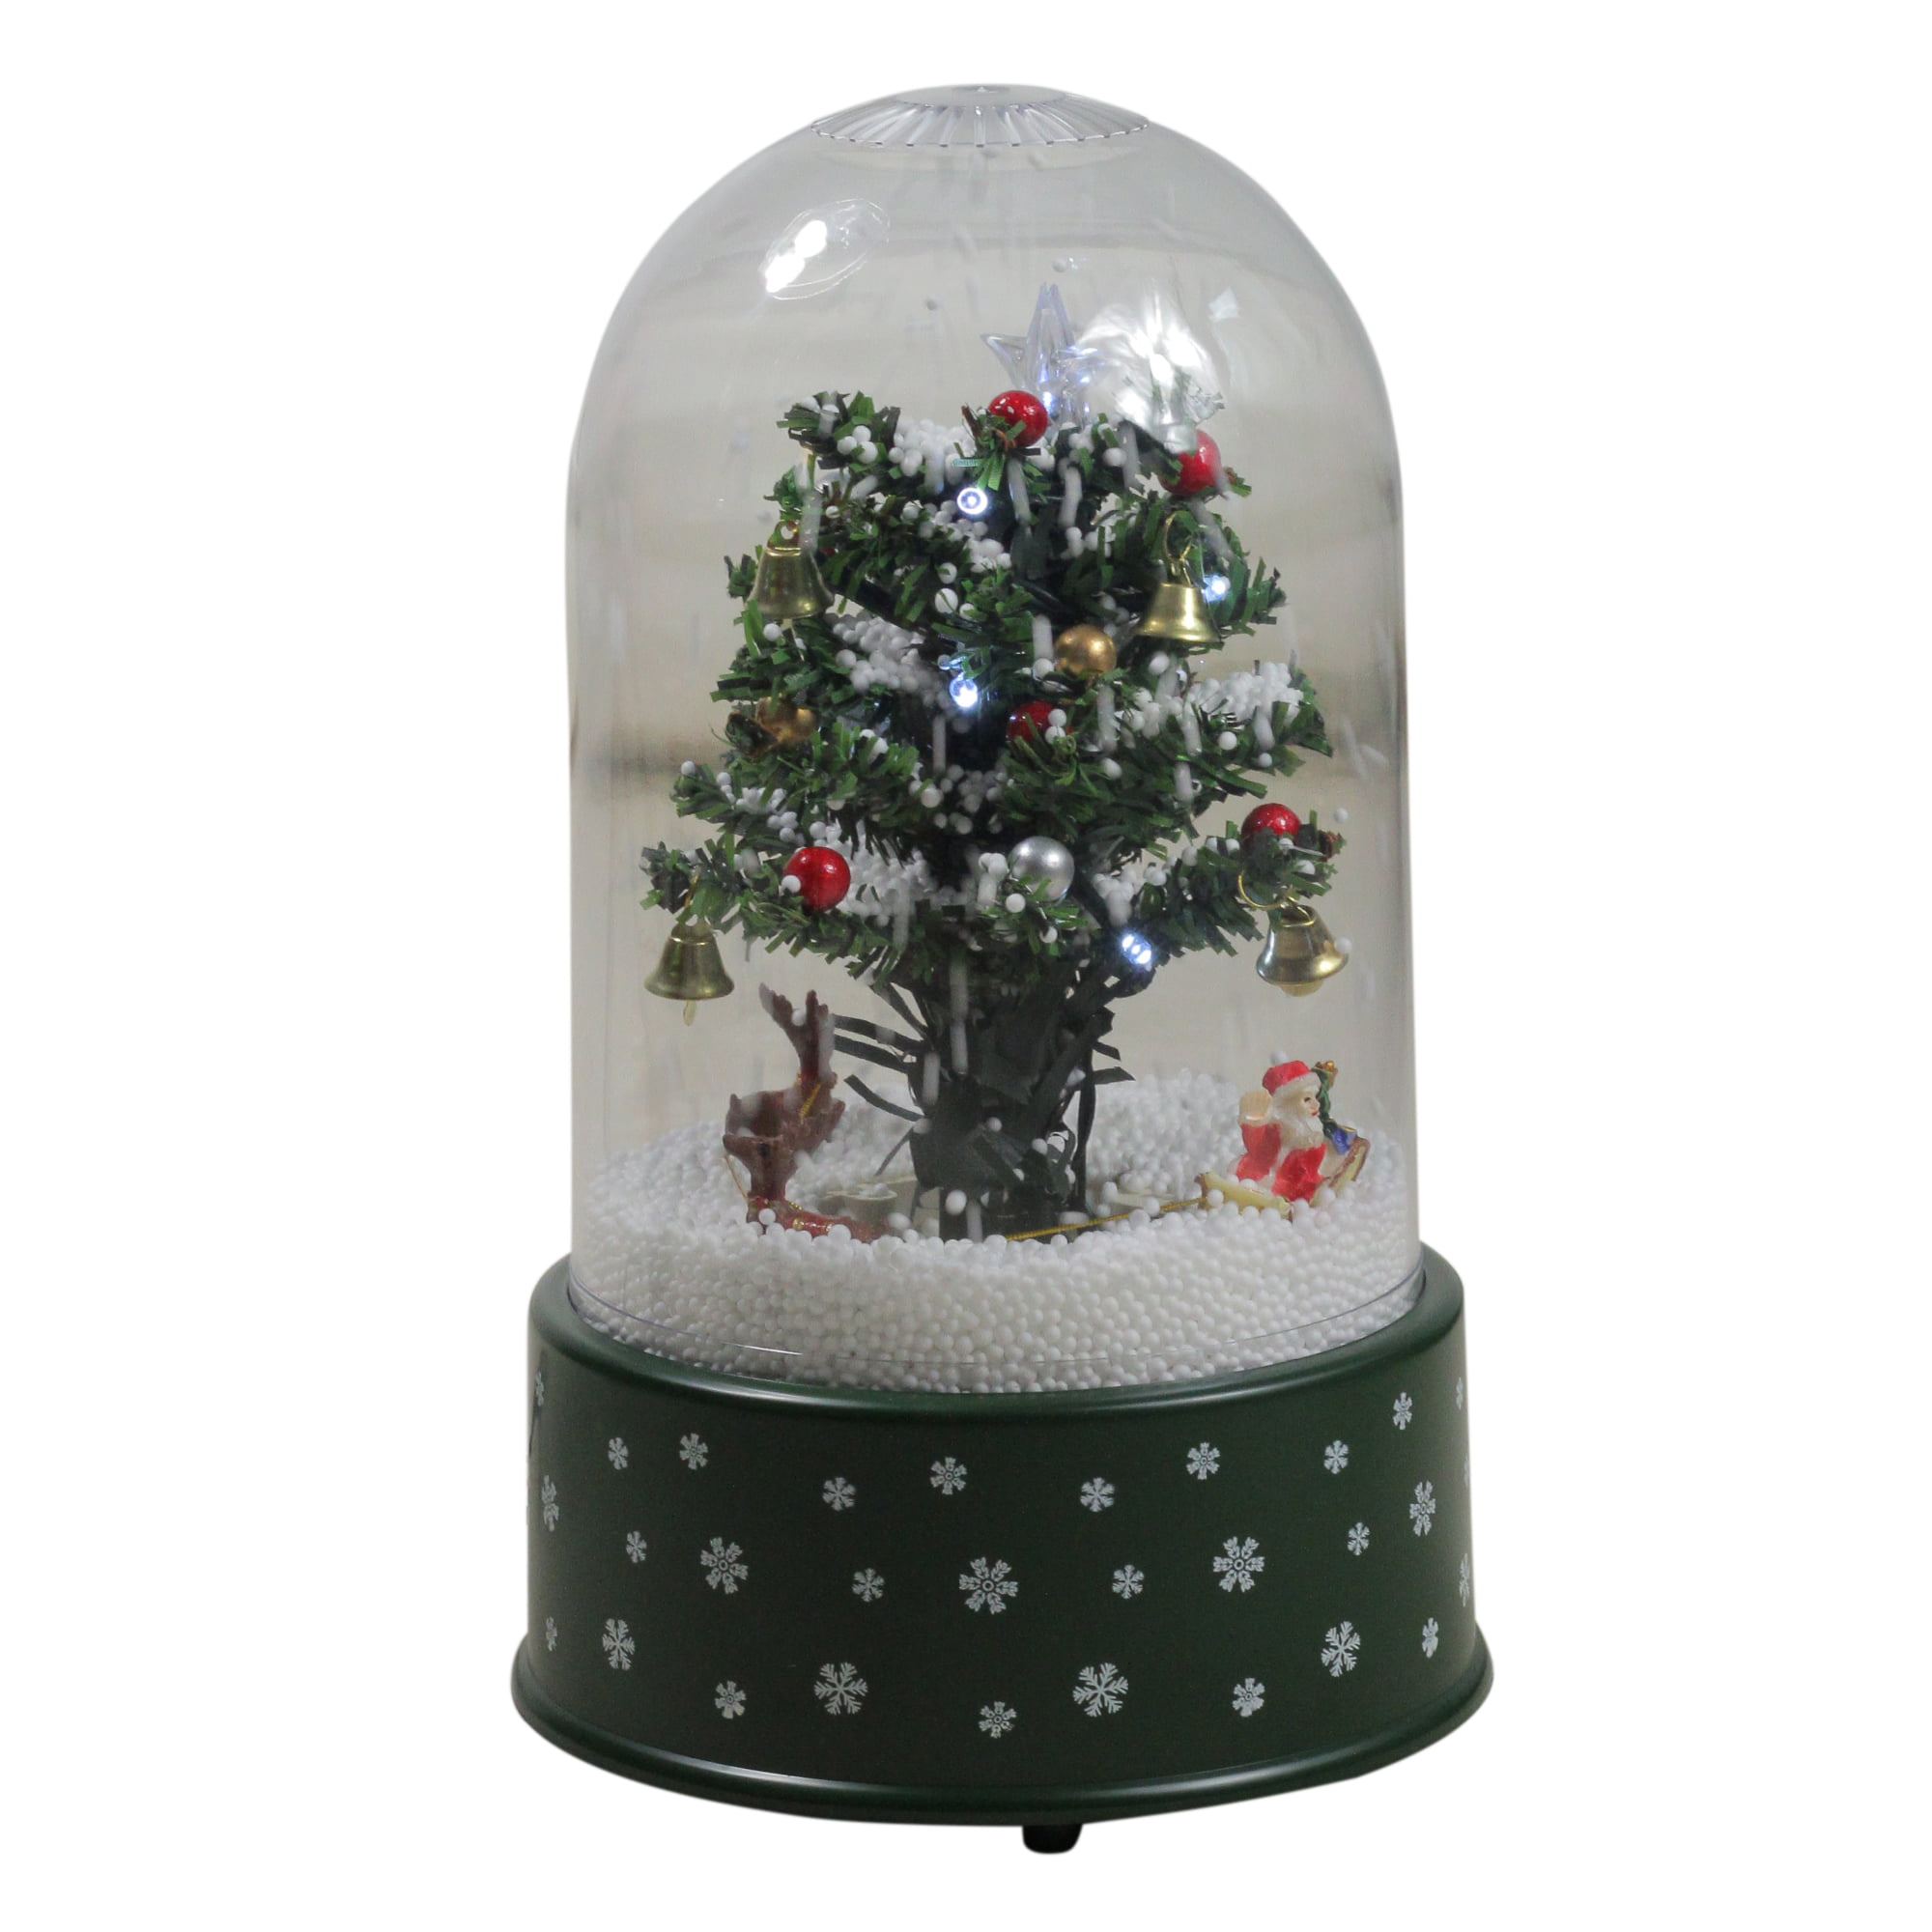 WeRChristmas Reindeer Snow Globe Christmas Decoration 13 Cm White